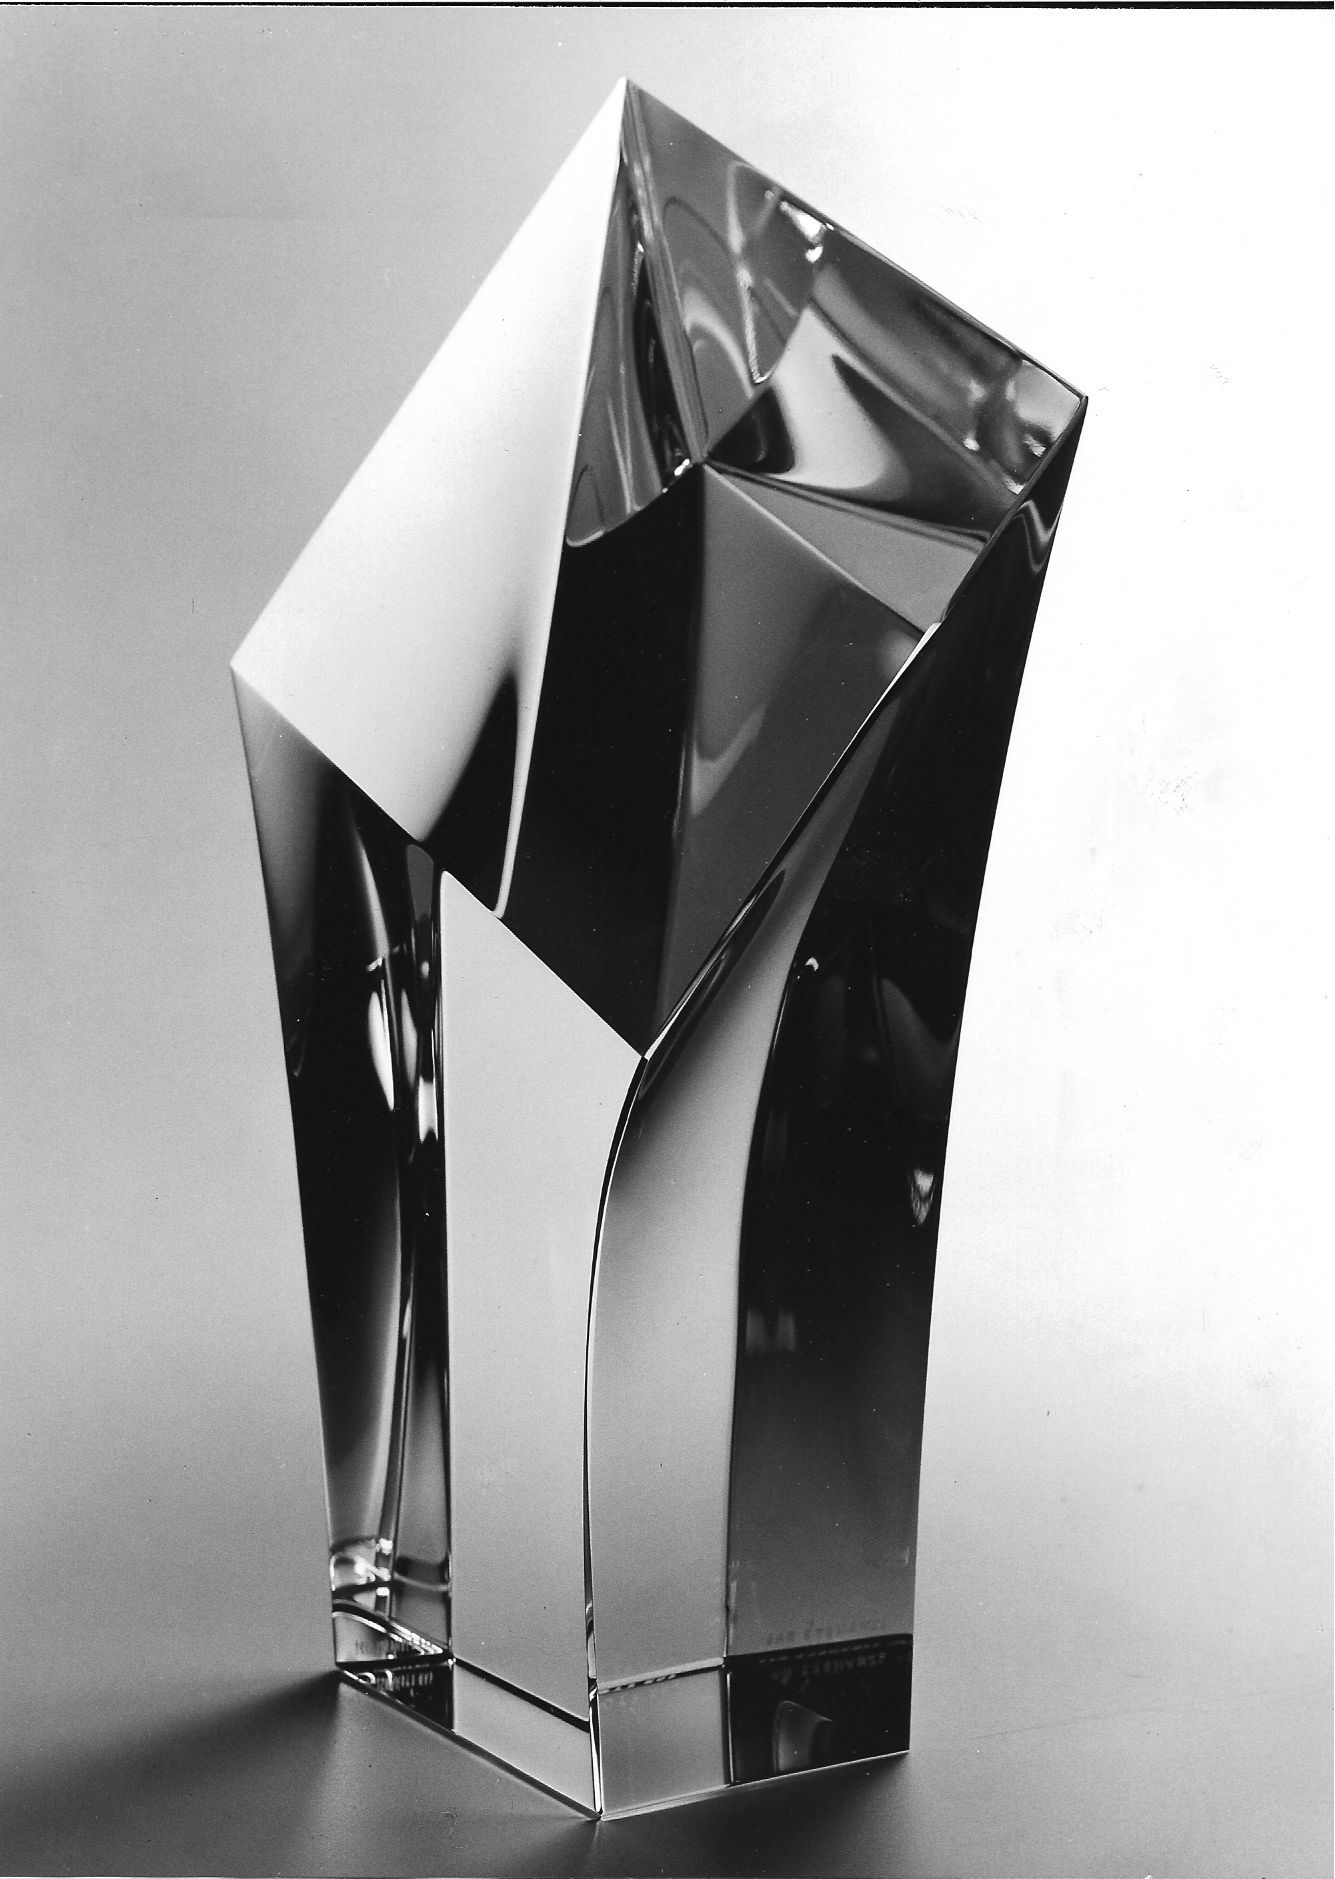 deskriptiva I, v 25 cm, optika, 1984